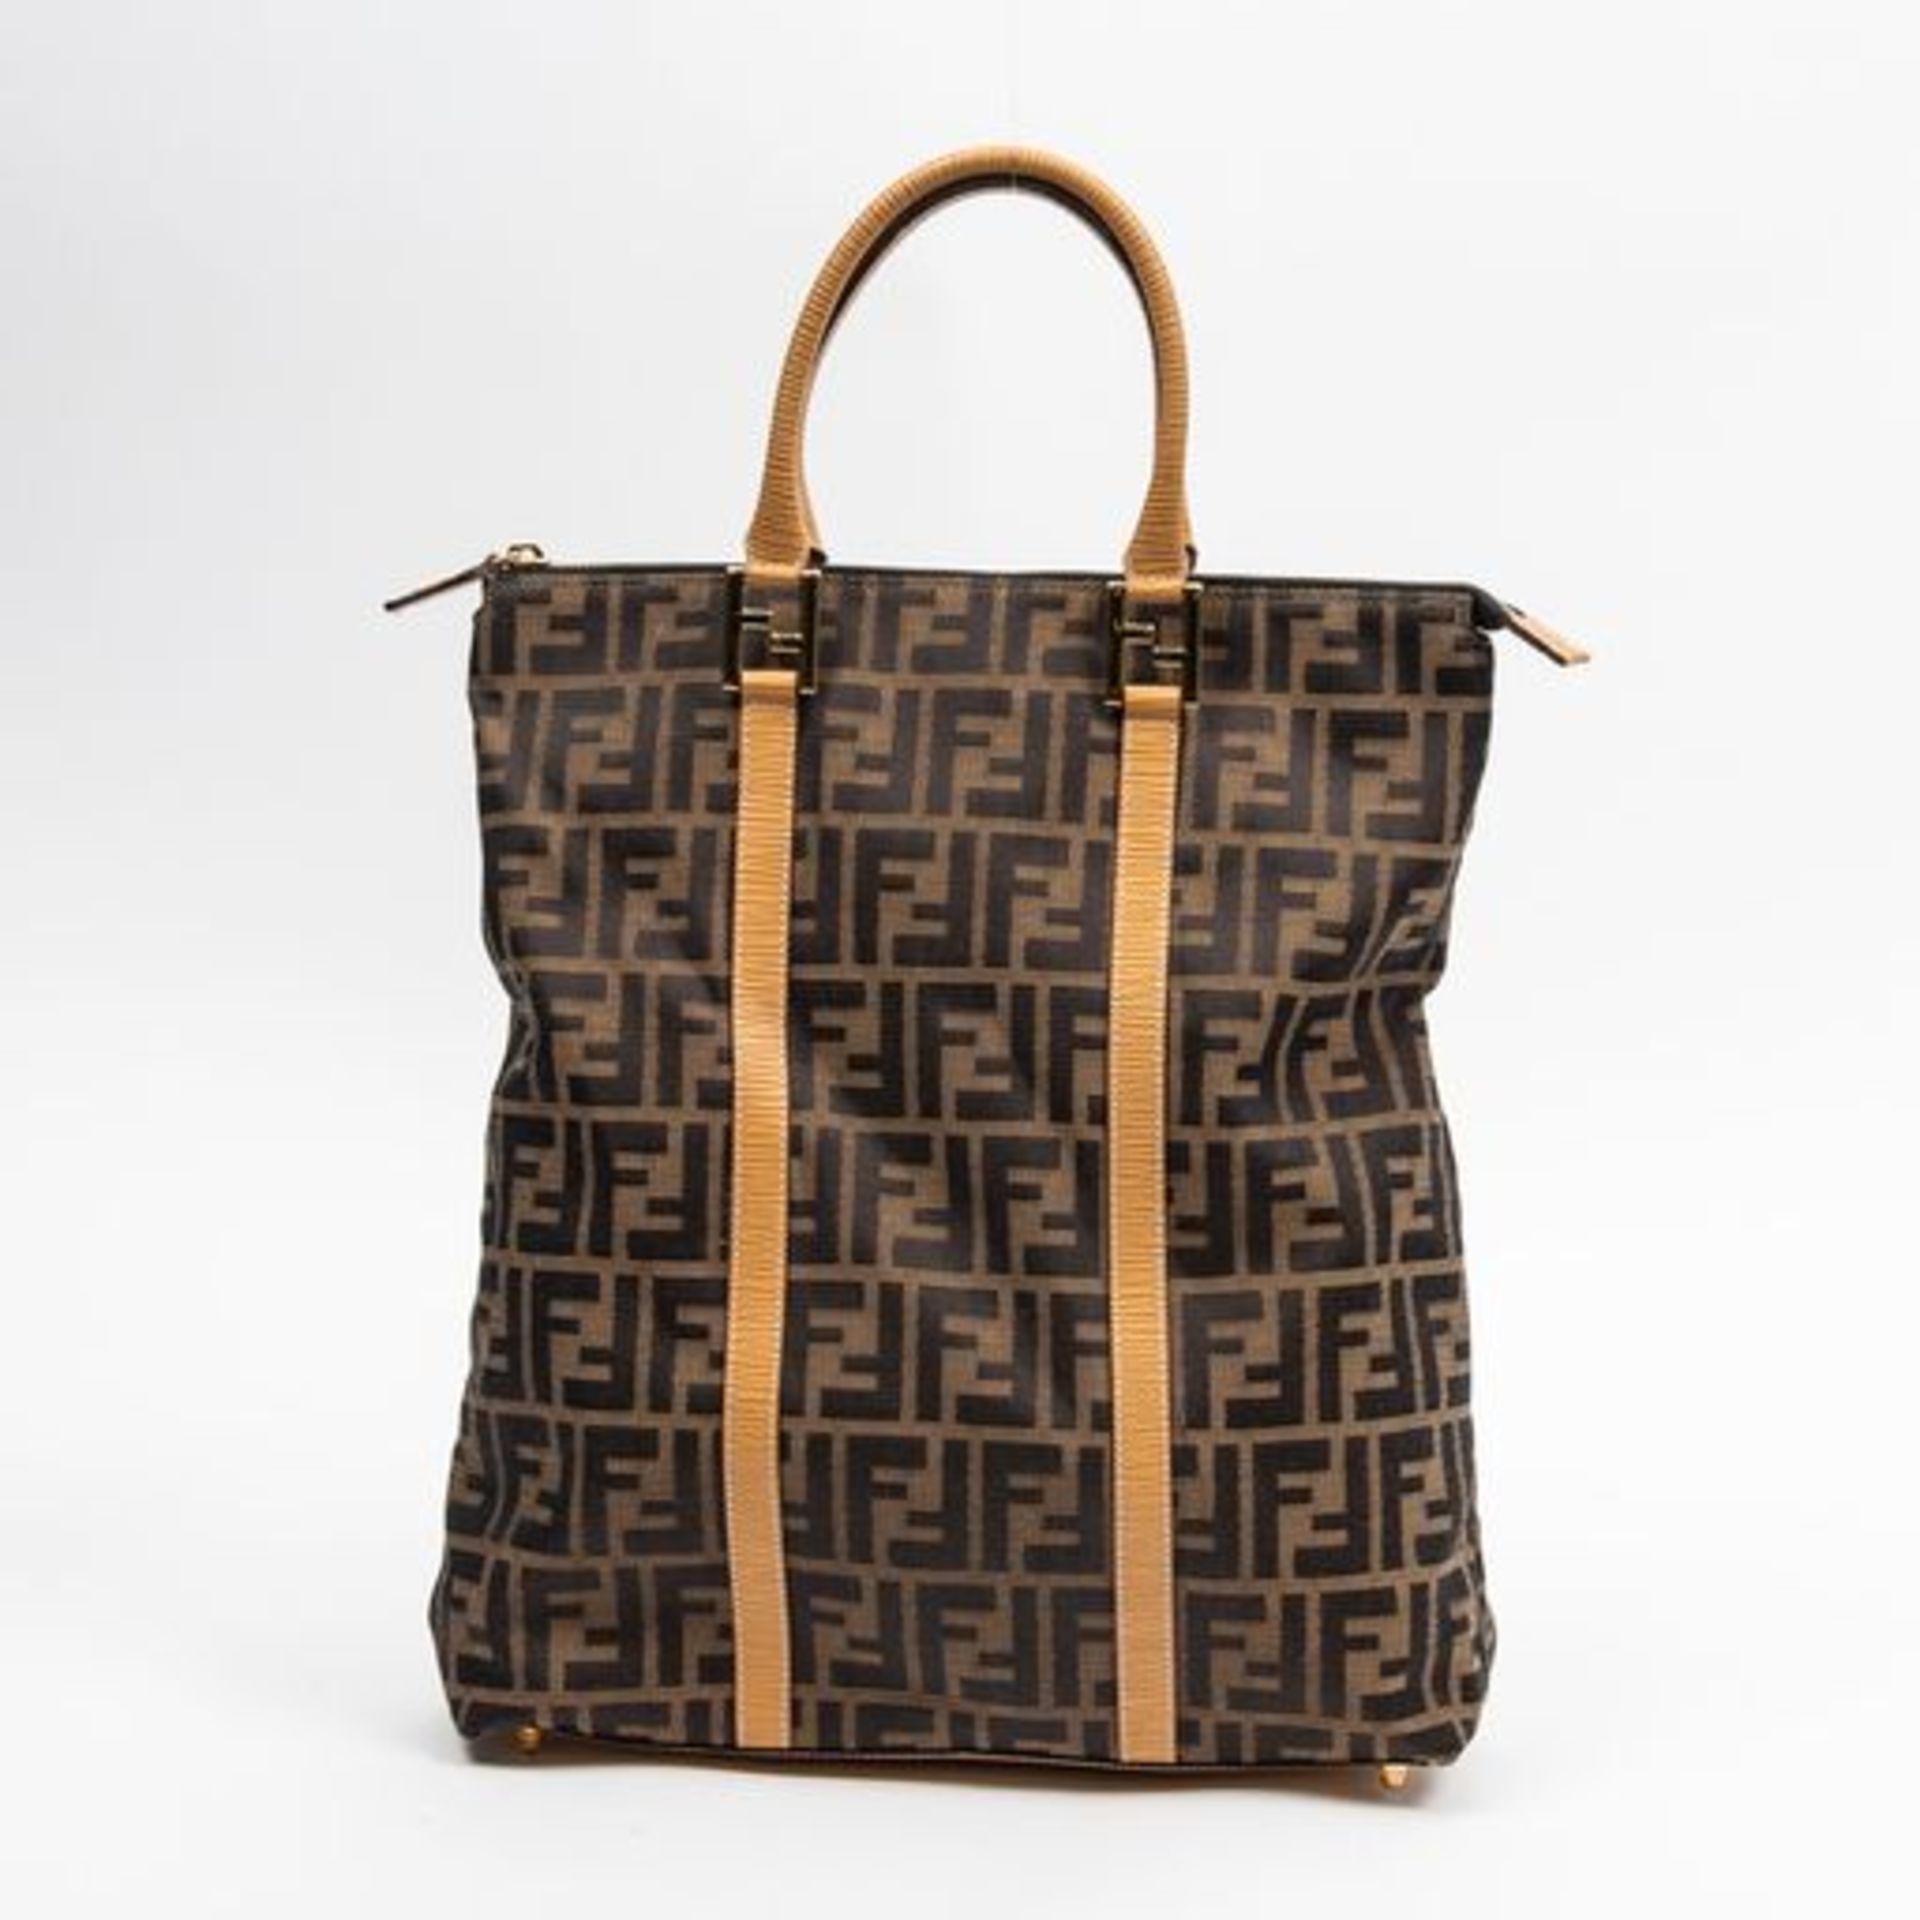 RRP £945 Fendi Tall Zip Tote Handbag Brown/Tan - AAR9934 - Grade A - (Bags Are Not On Site, Please